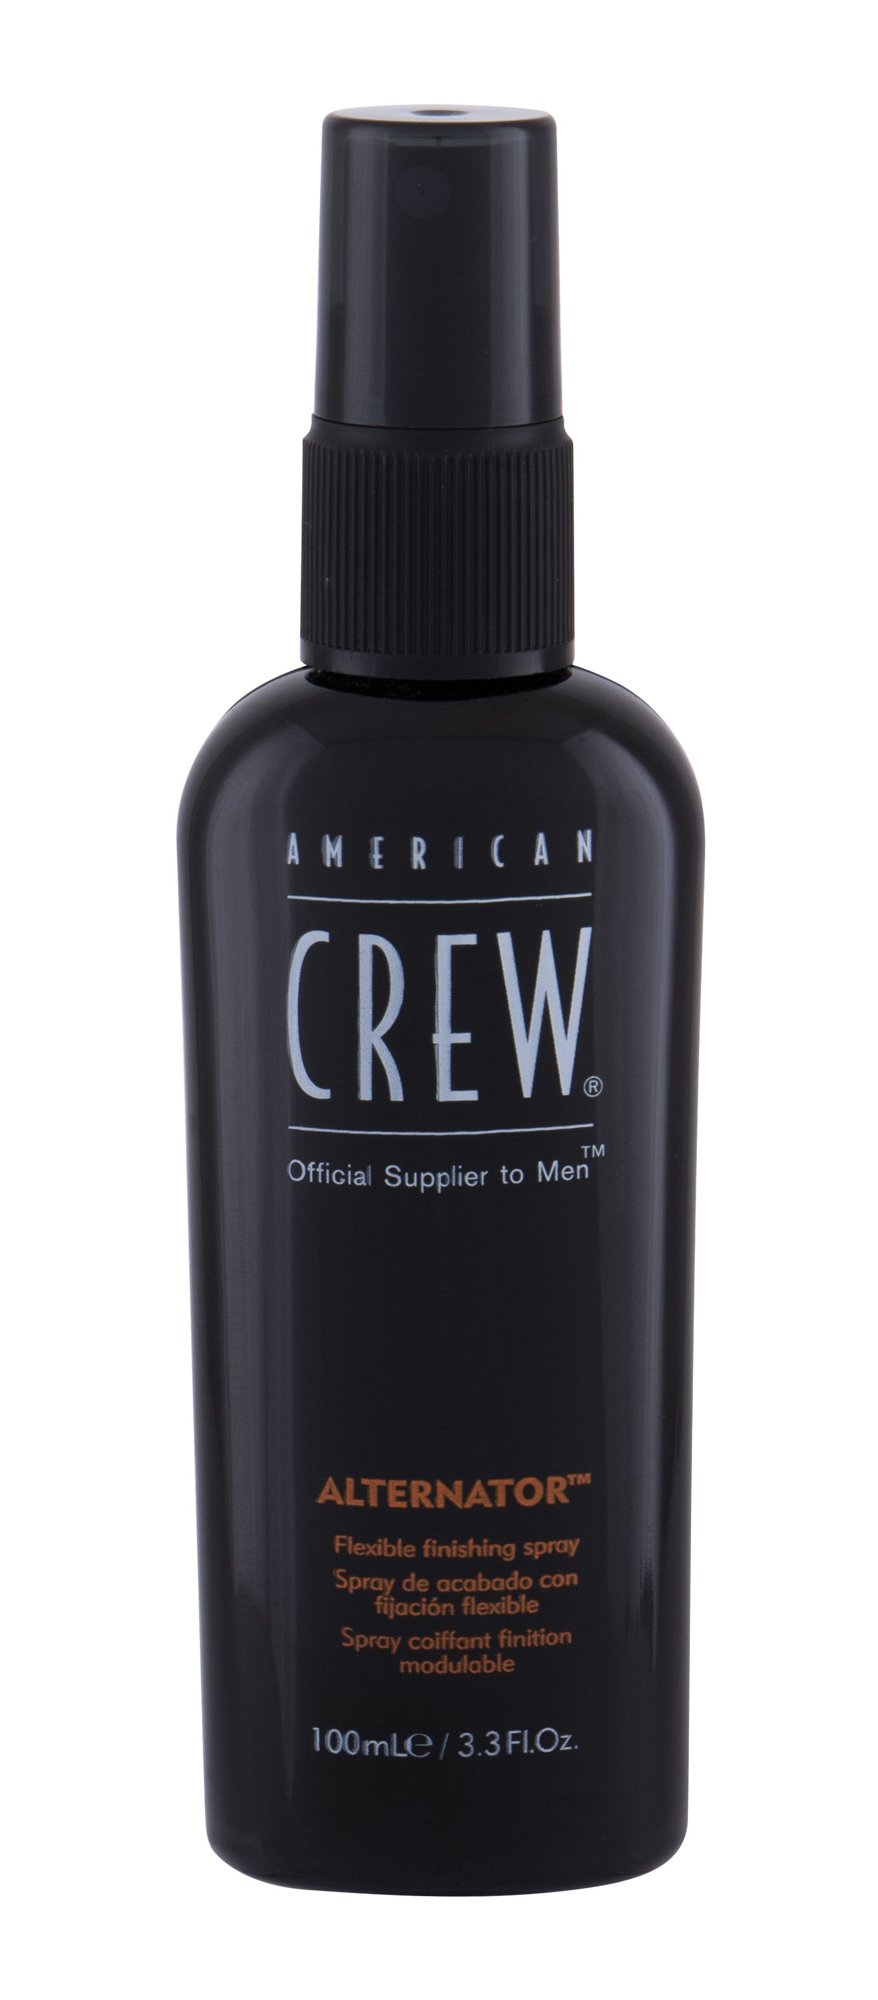 American Crew Alternator